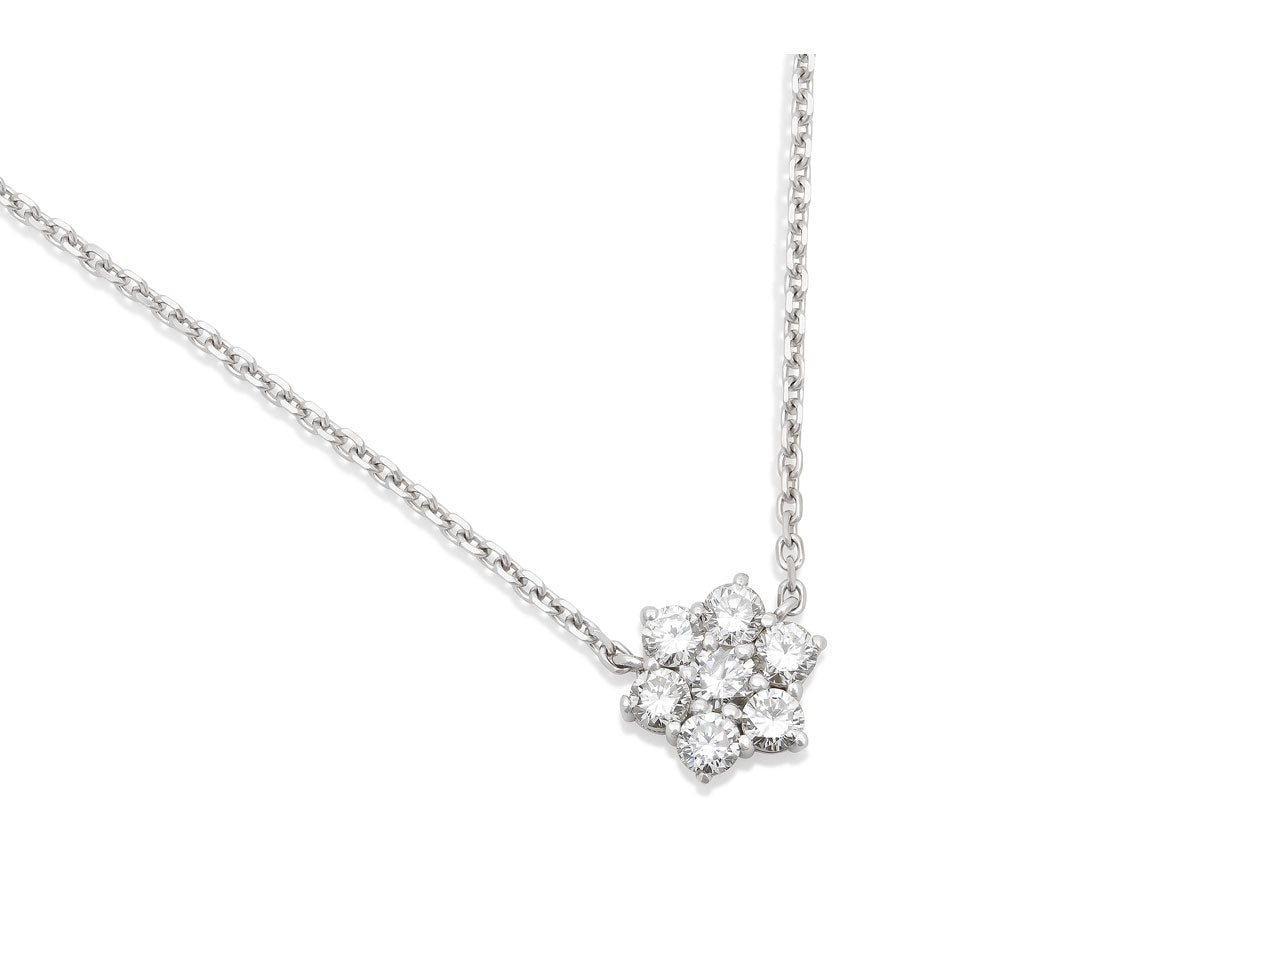 Beladora 'Bespoke' Floral Diamond Pendant in 18K White Gold